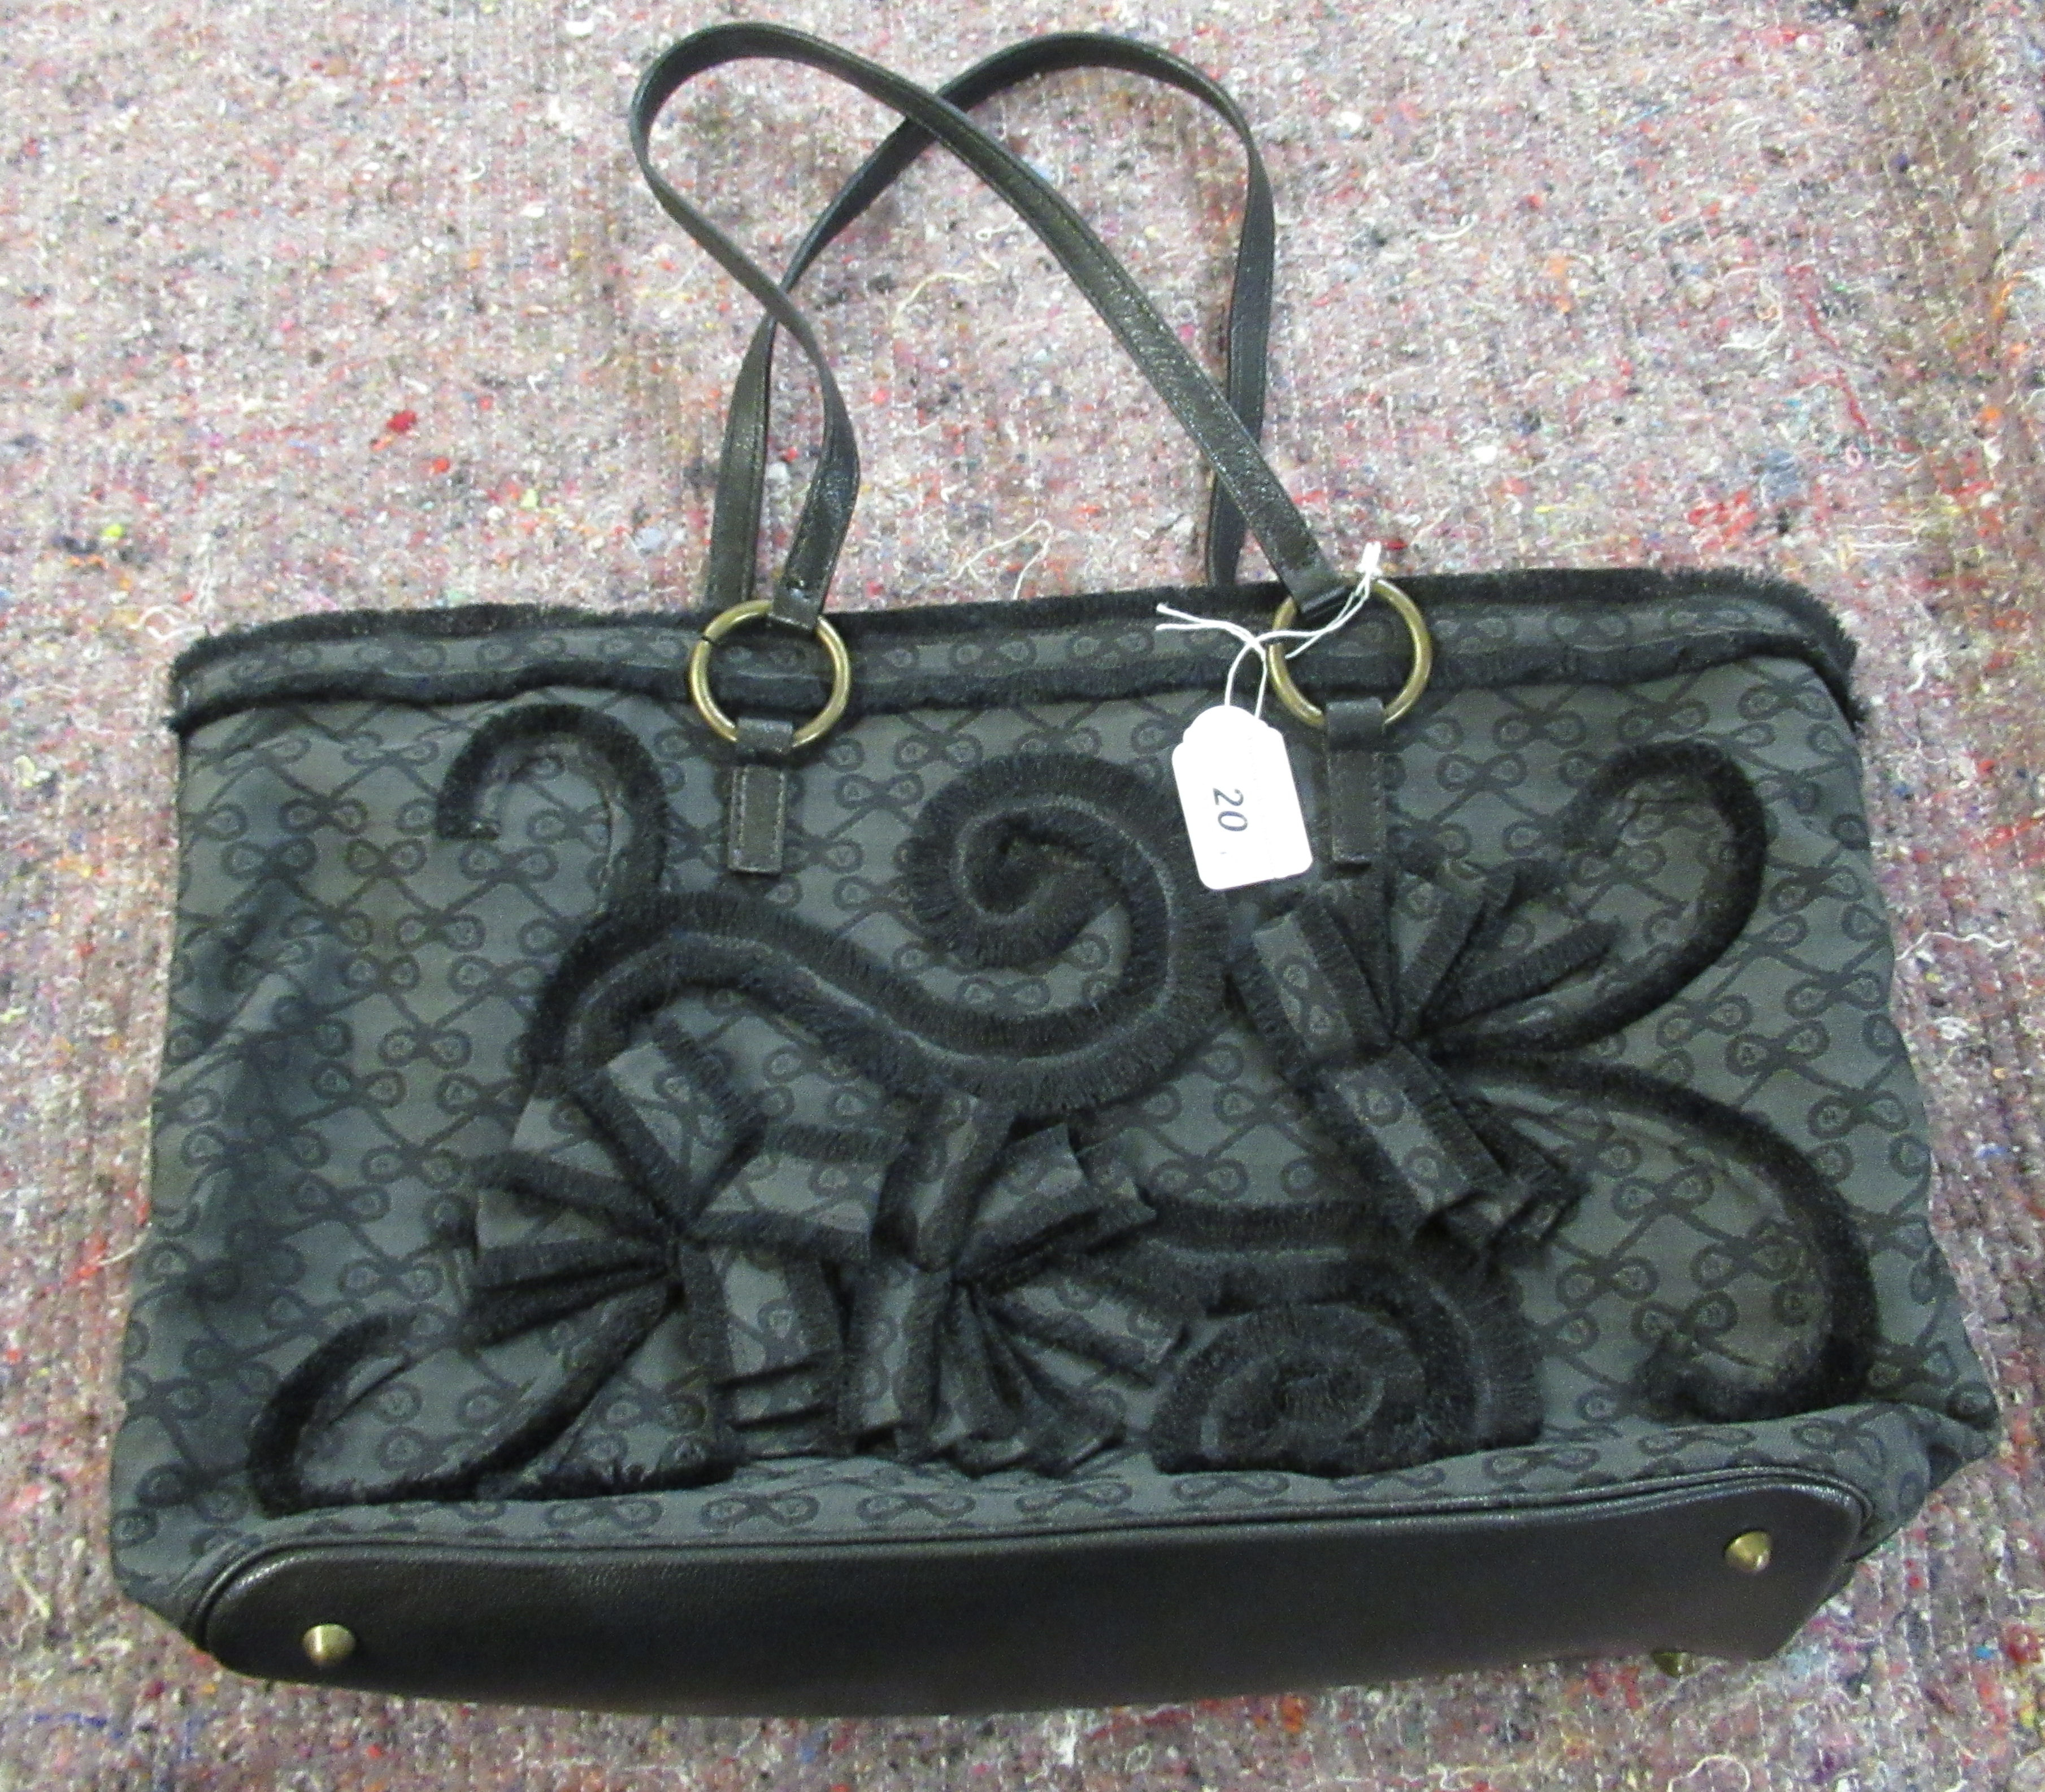 An Anya Hindmarch textured black fabric tote bag OS5